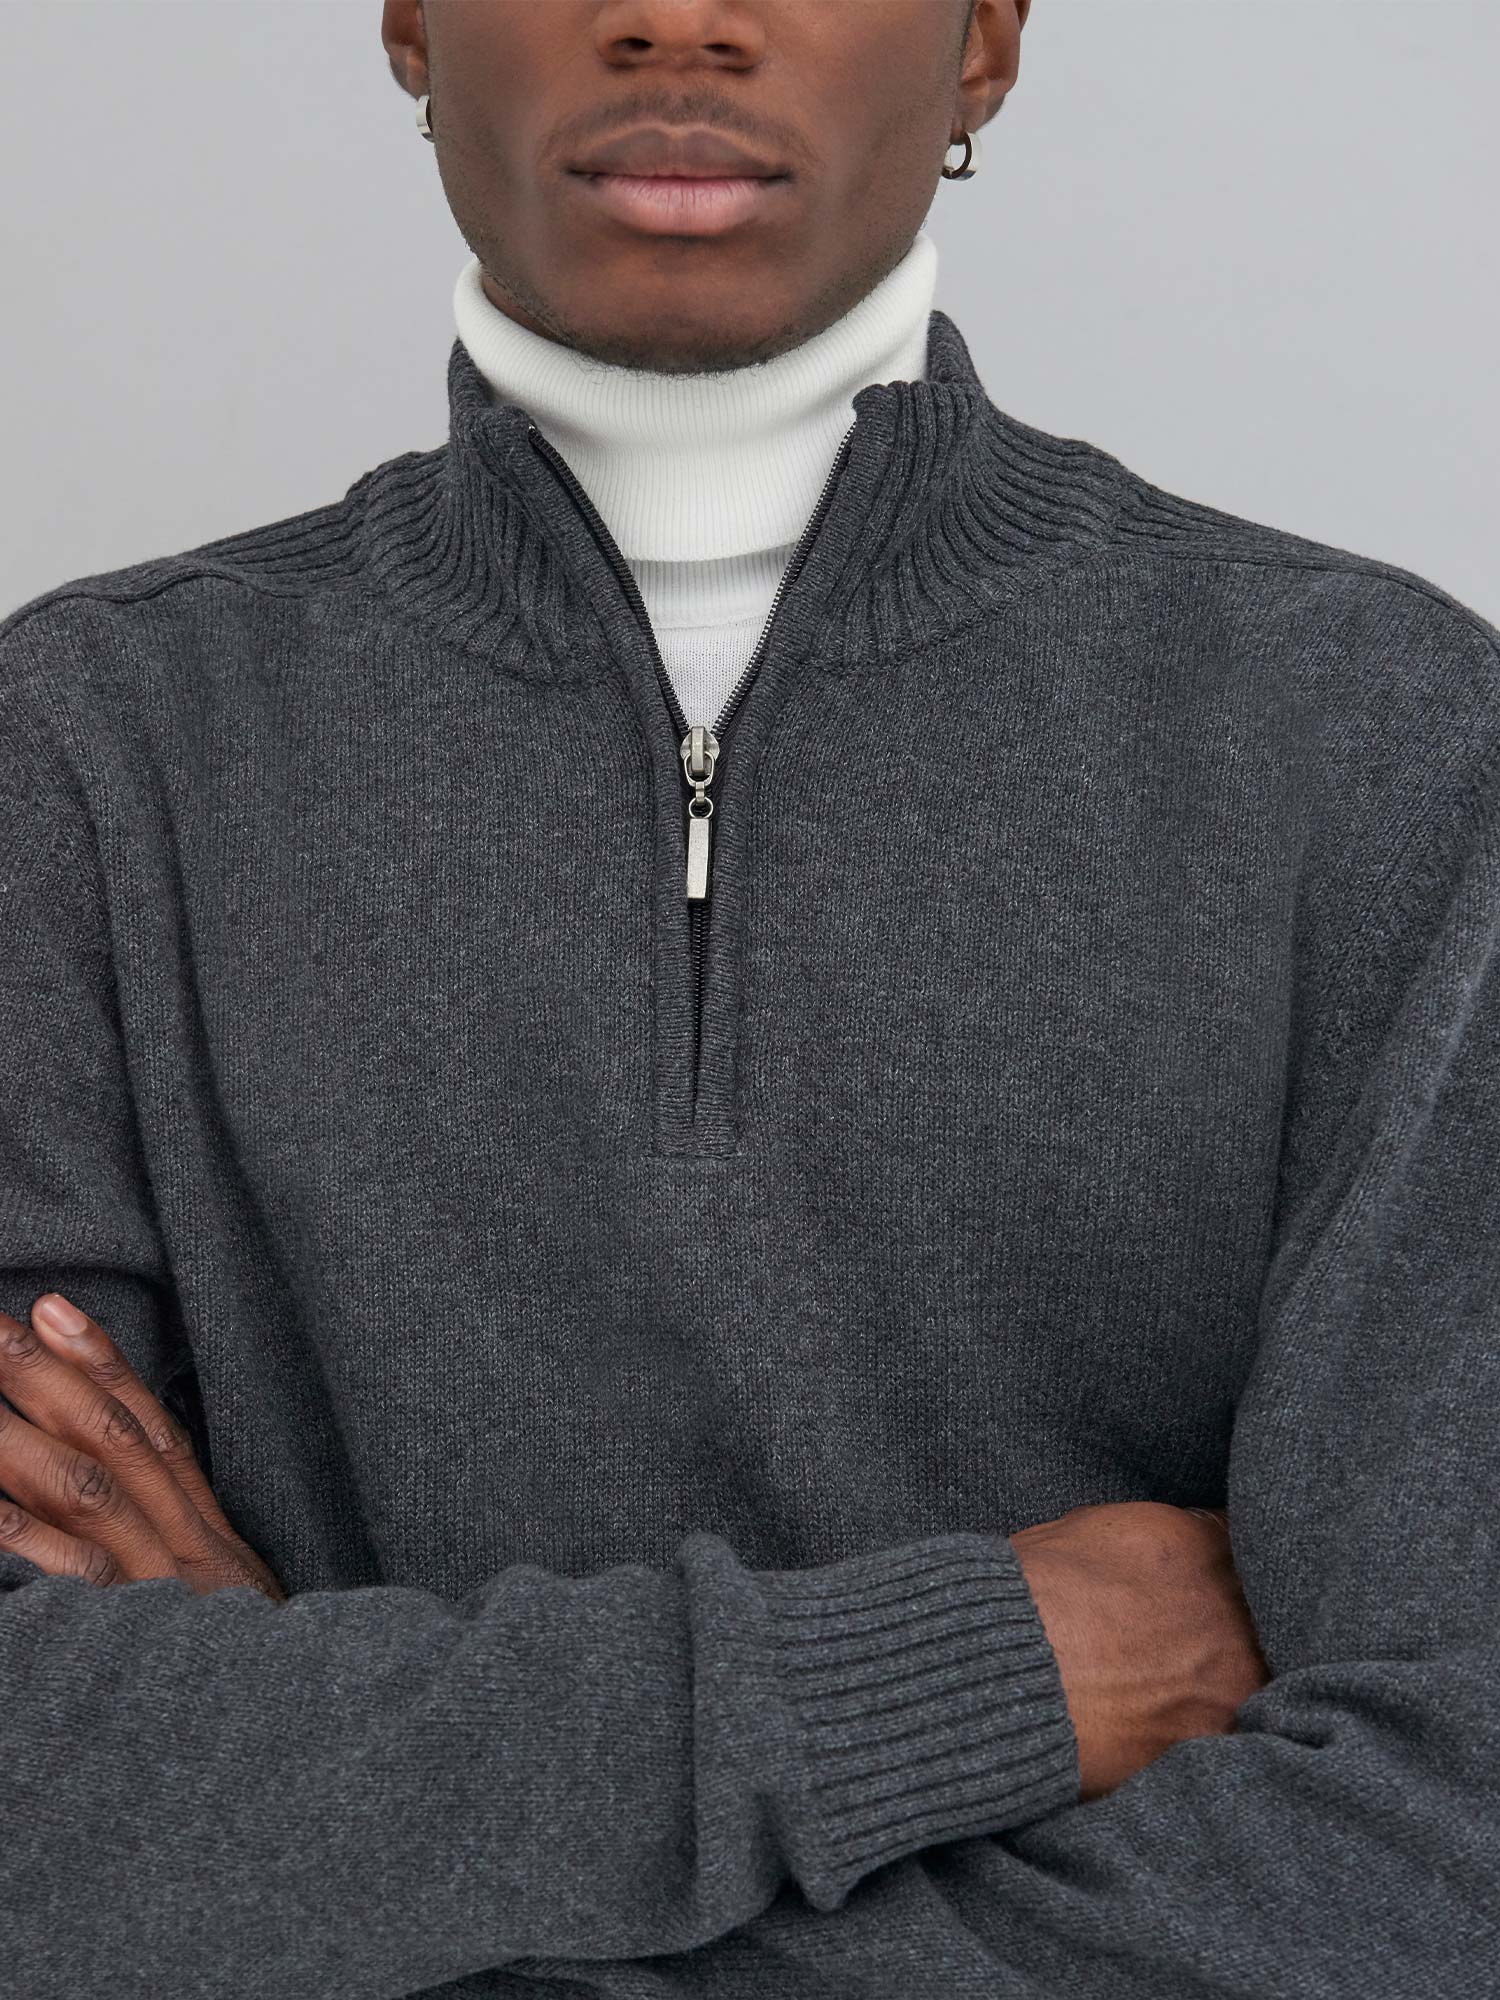 awdis unisex quarter zip sweatshirt ea061 portrait charcoal model close up